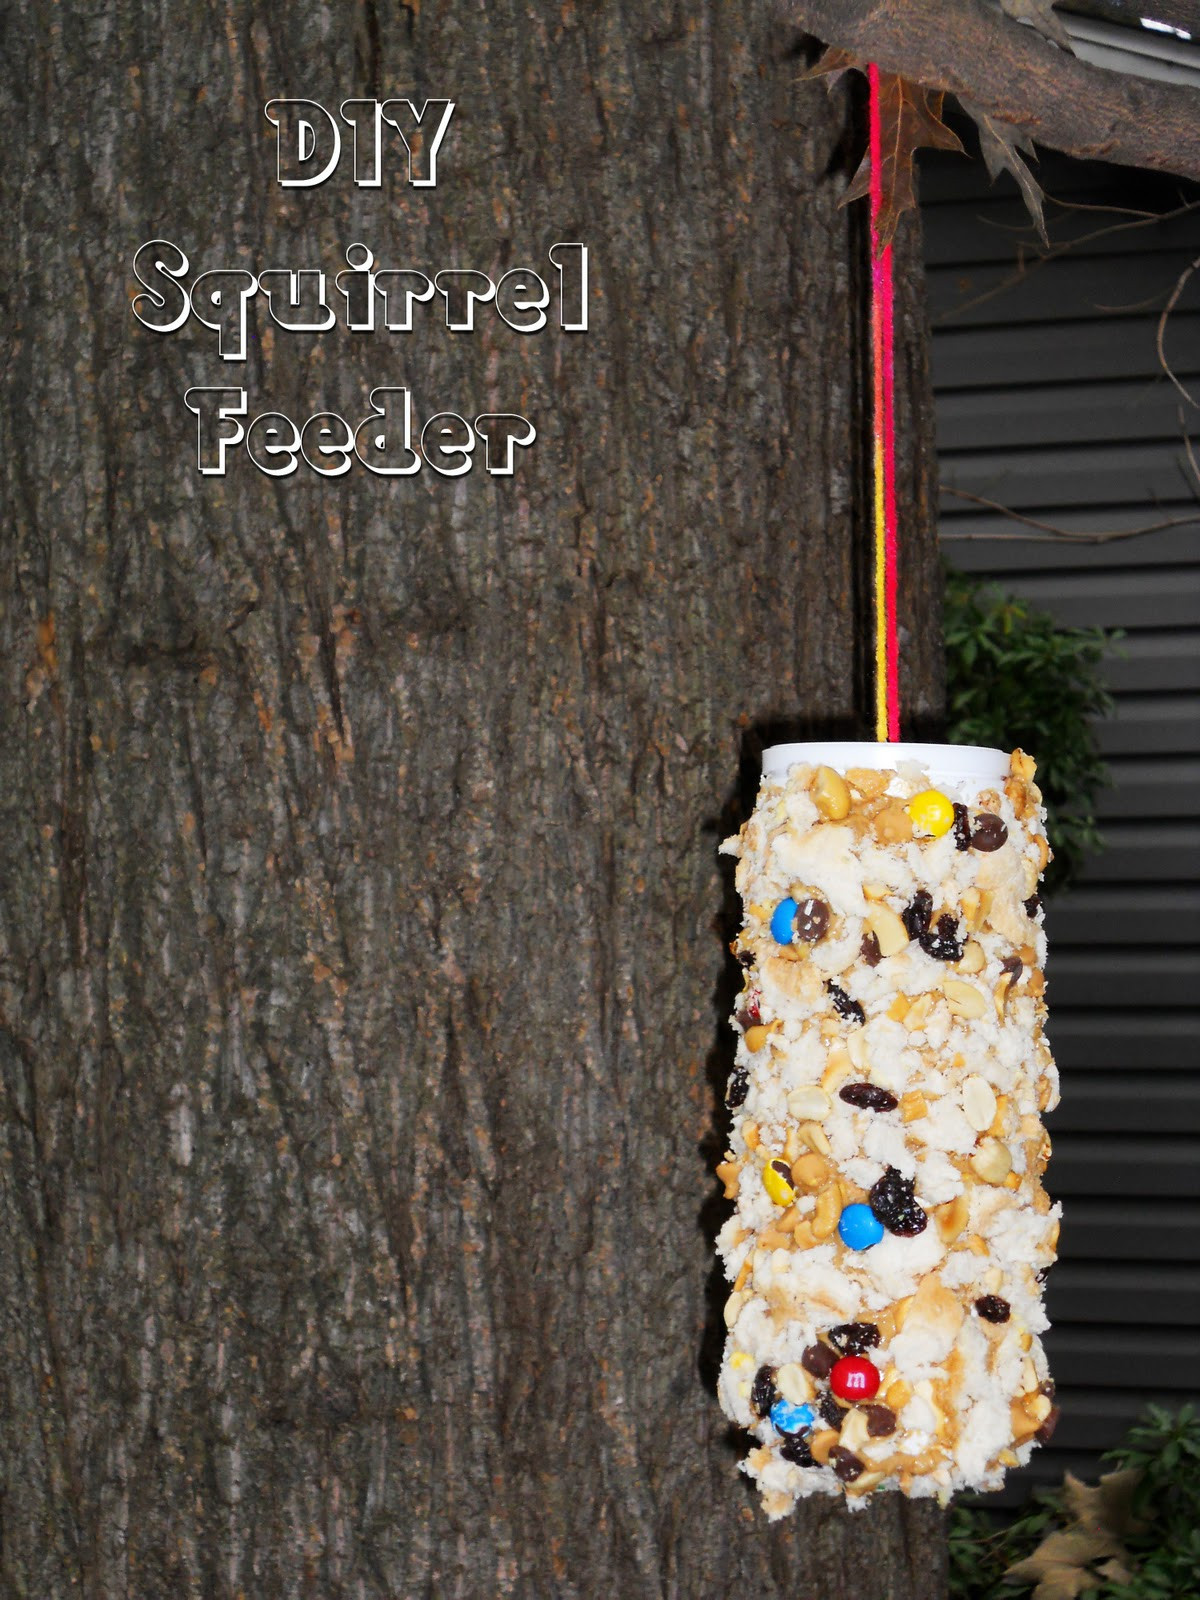 Best ideas about Squirrel Feeder DIY
. Save or Pin The Peanut Gallery DIY Squirrel Feeder Now.